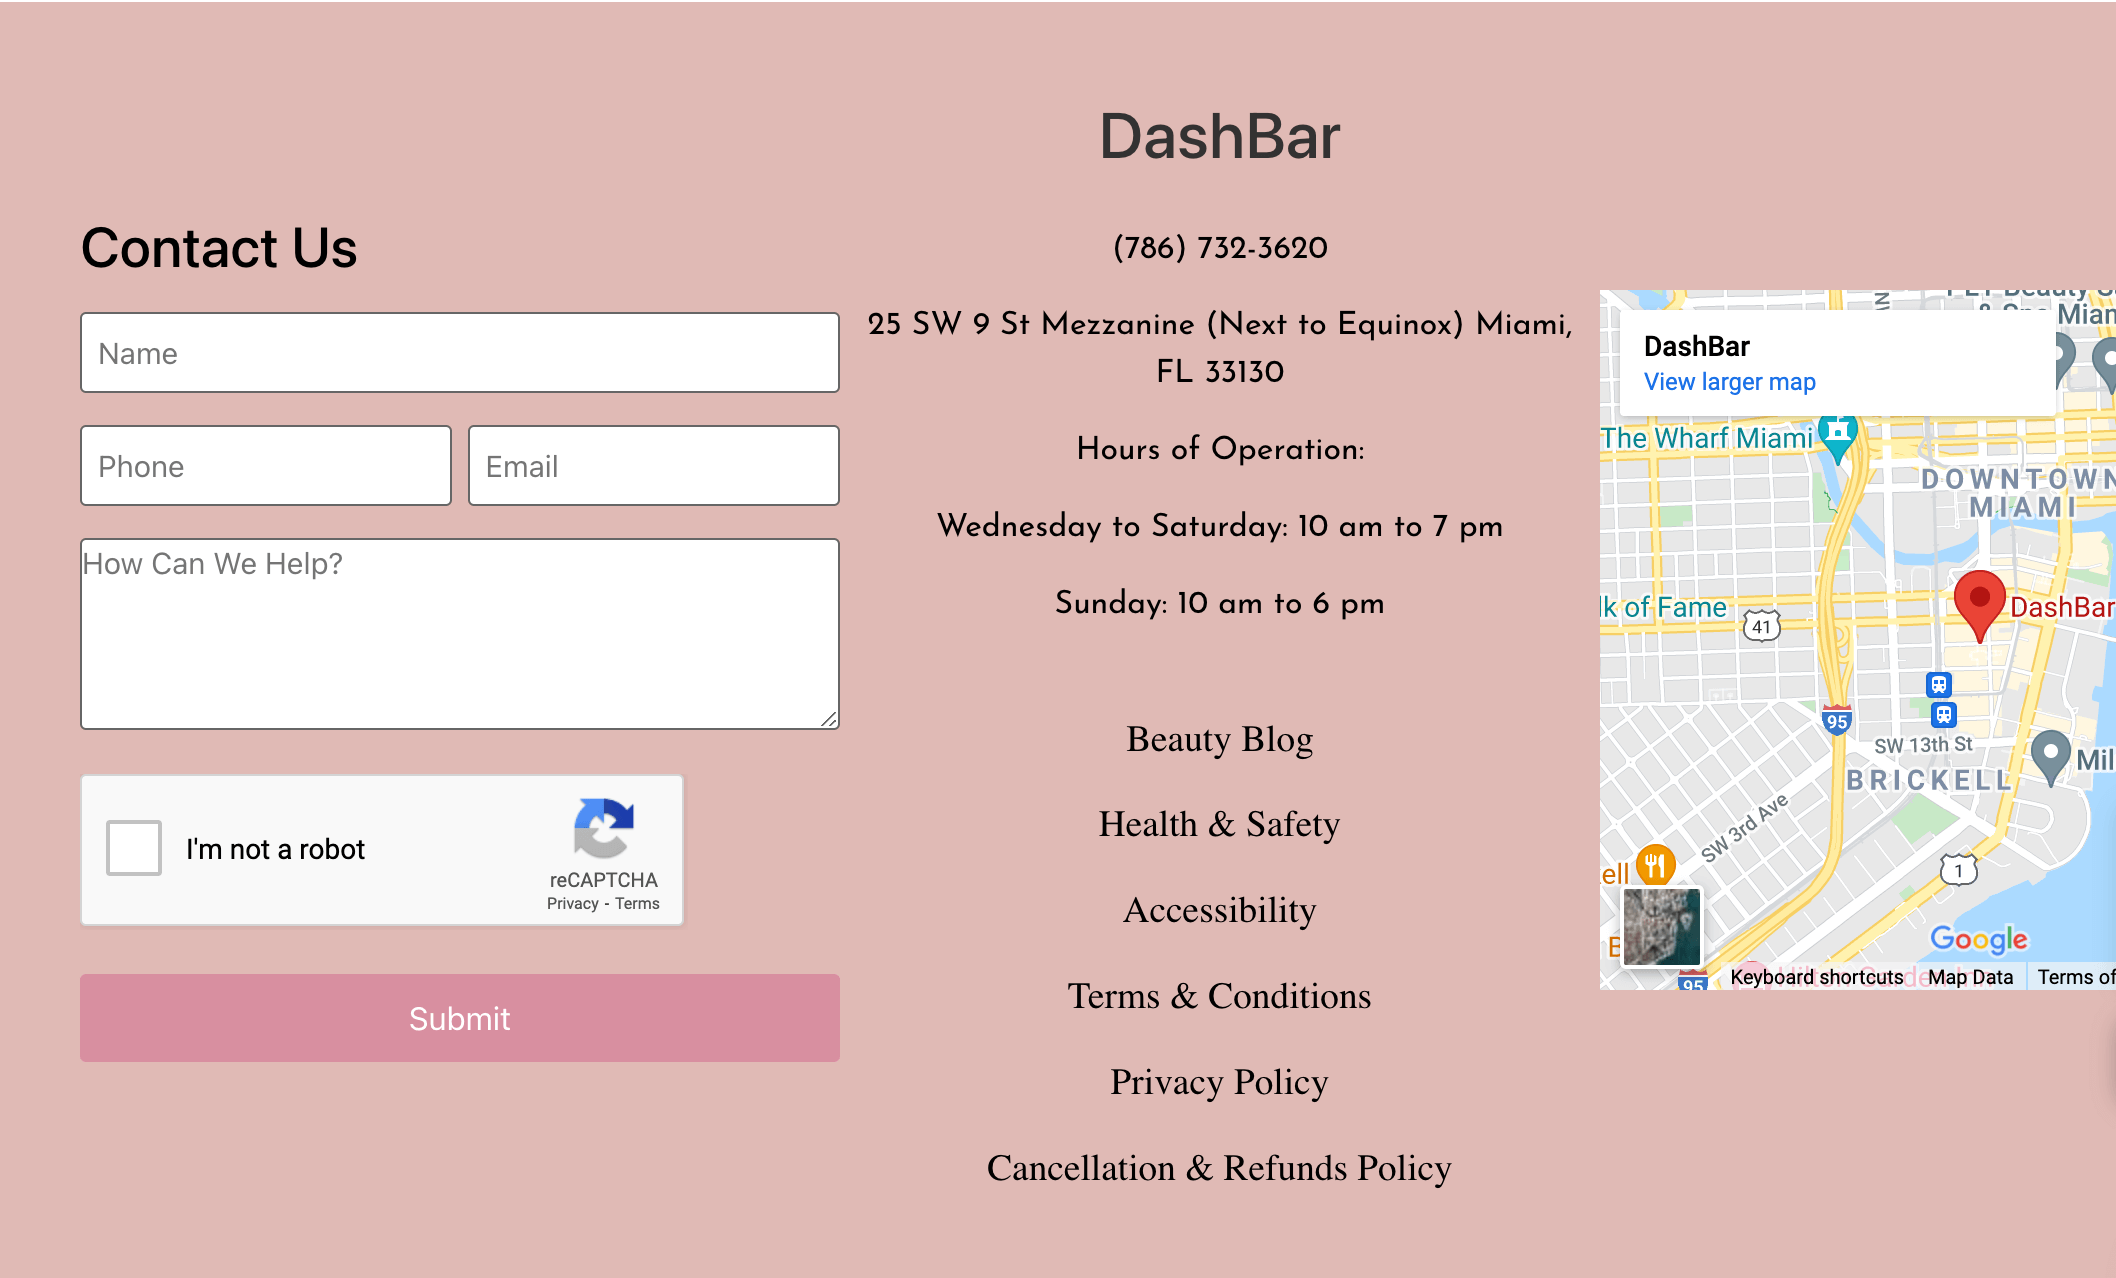 Dash Bar Miami's contact page